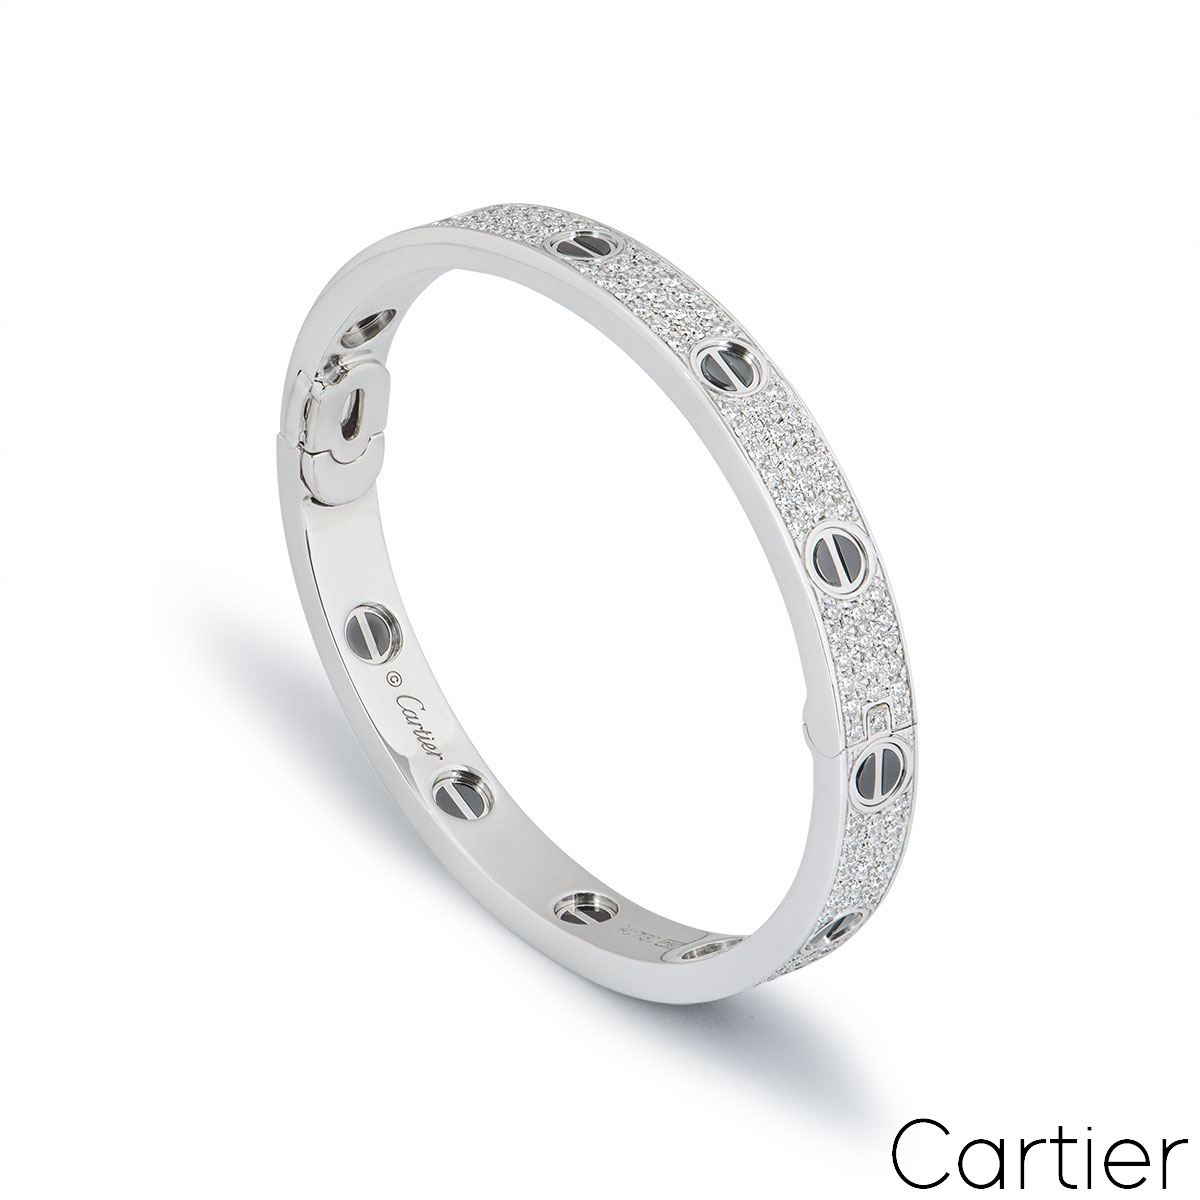 Cartier White Gold Pave Diamond & Ceramic Love Bracelet Size 16 N6032416